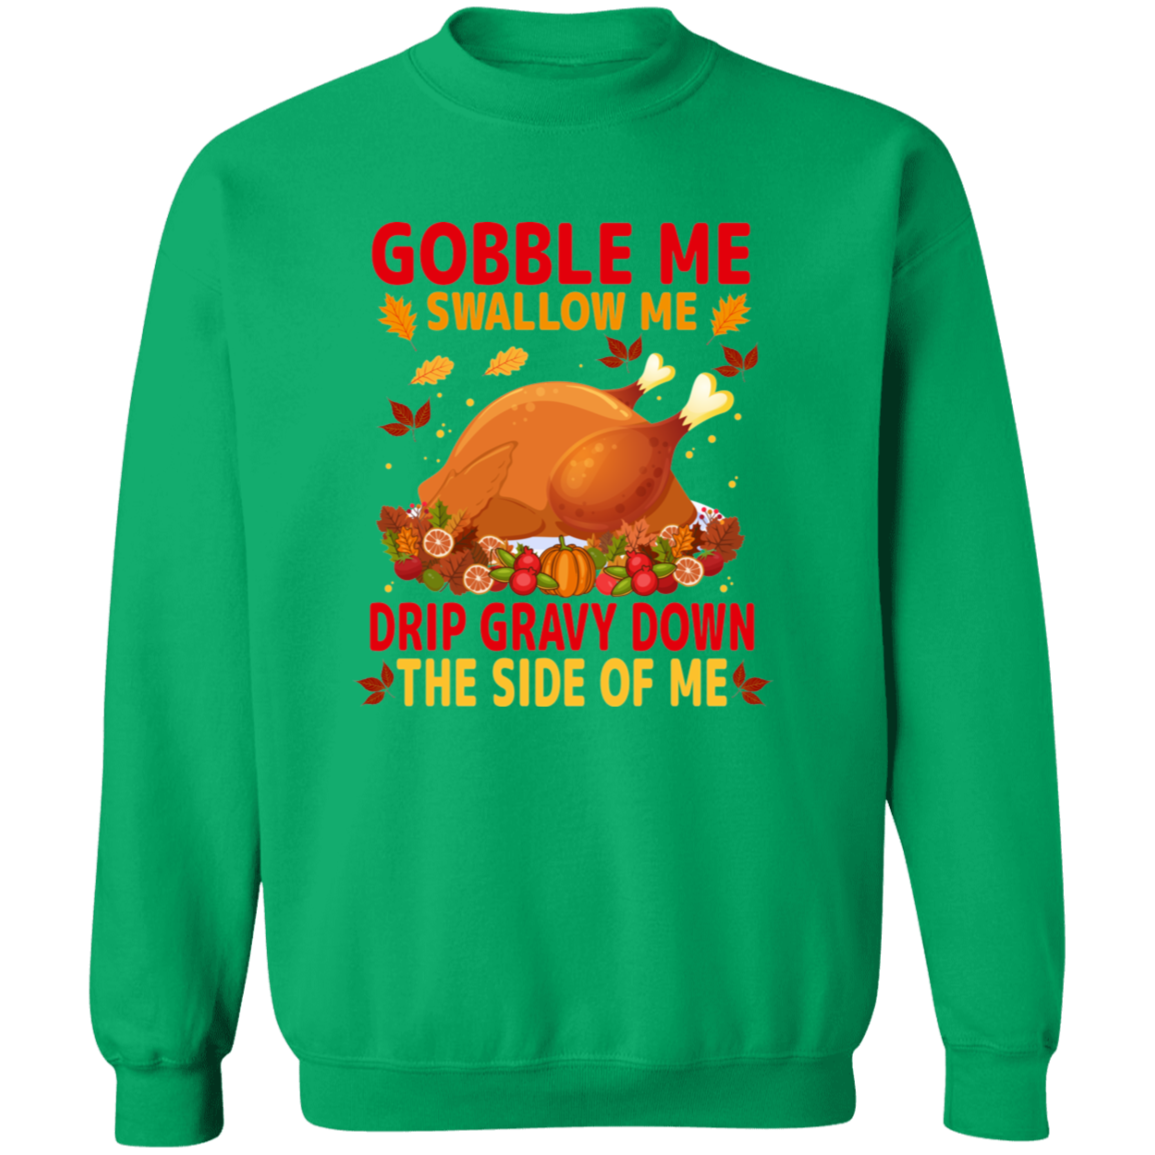 Gobble Me Swallow Me Drip Gravy Down The Side Of Me Sweatshirt